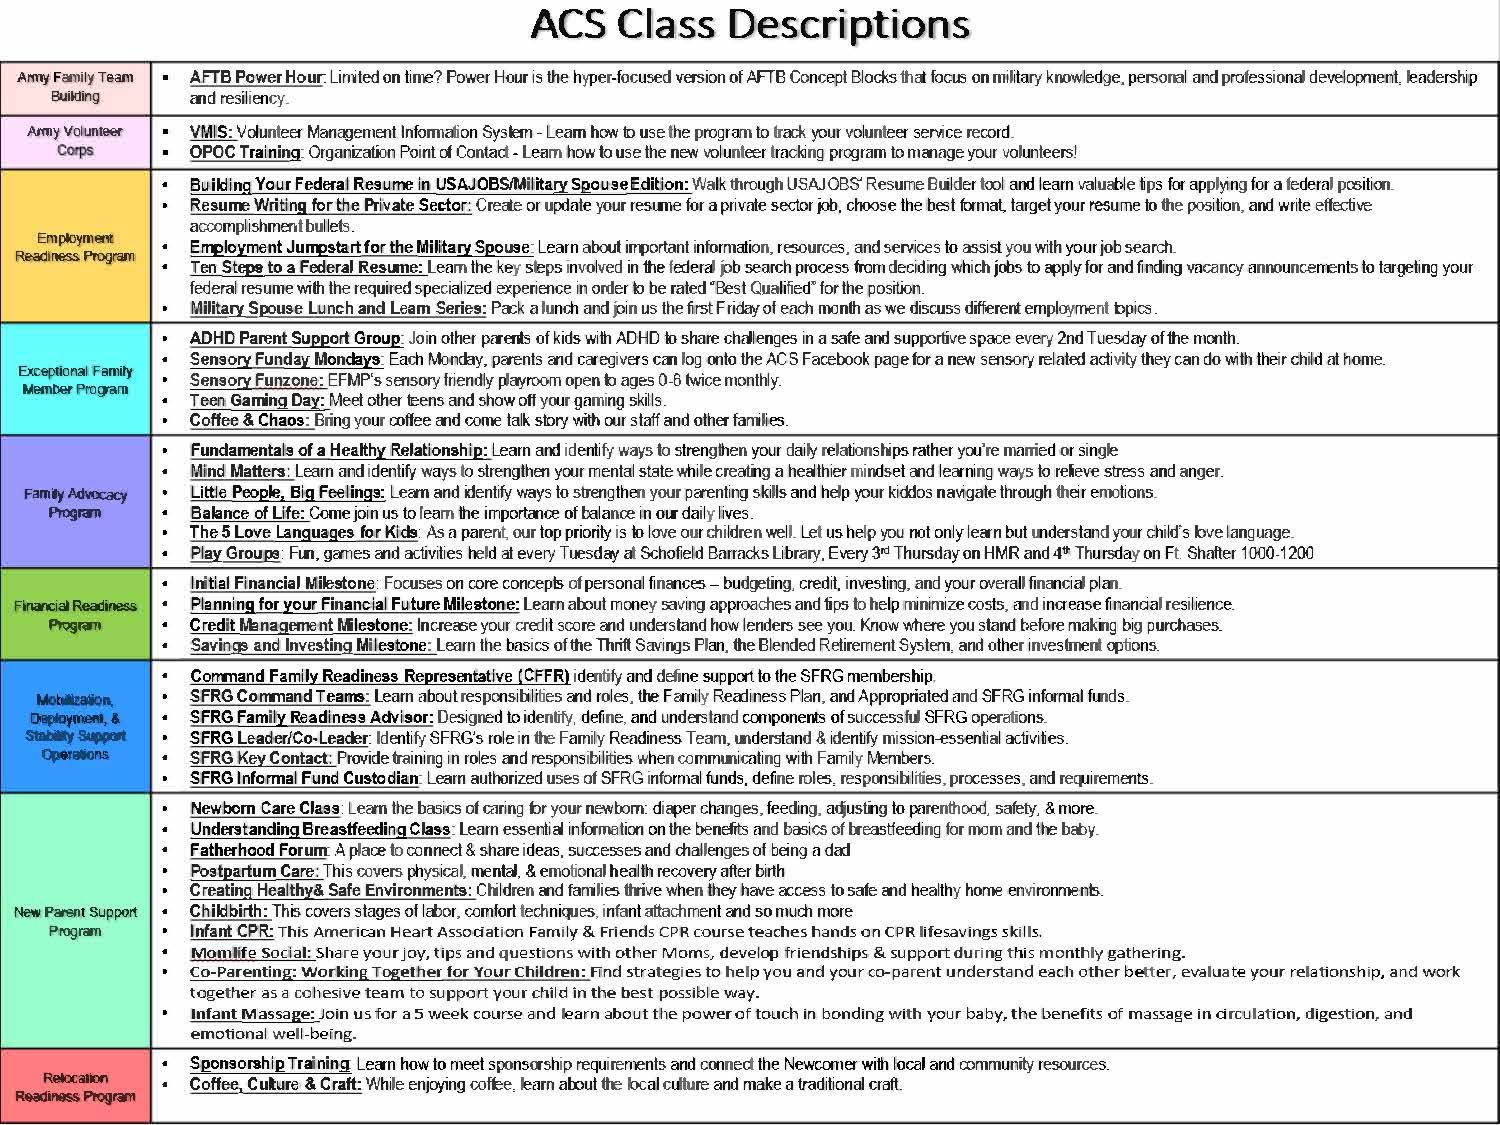 ACS Class.jpg